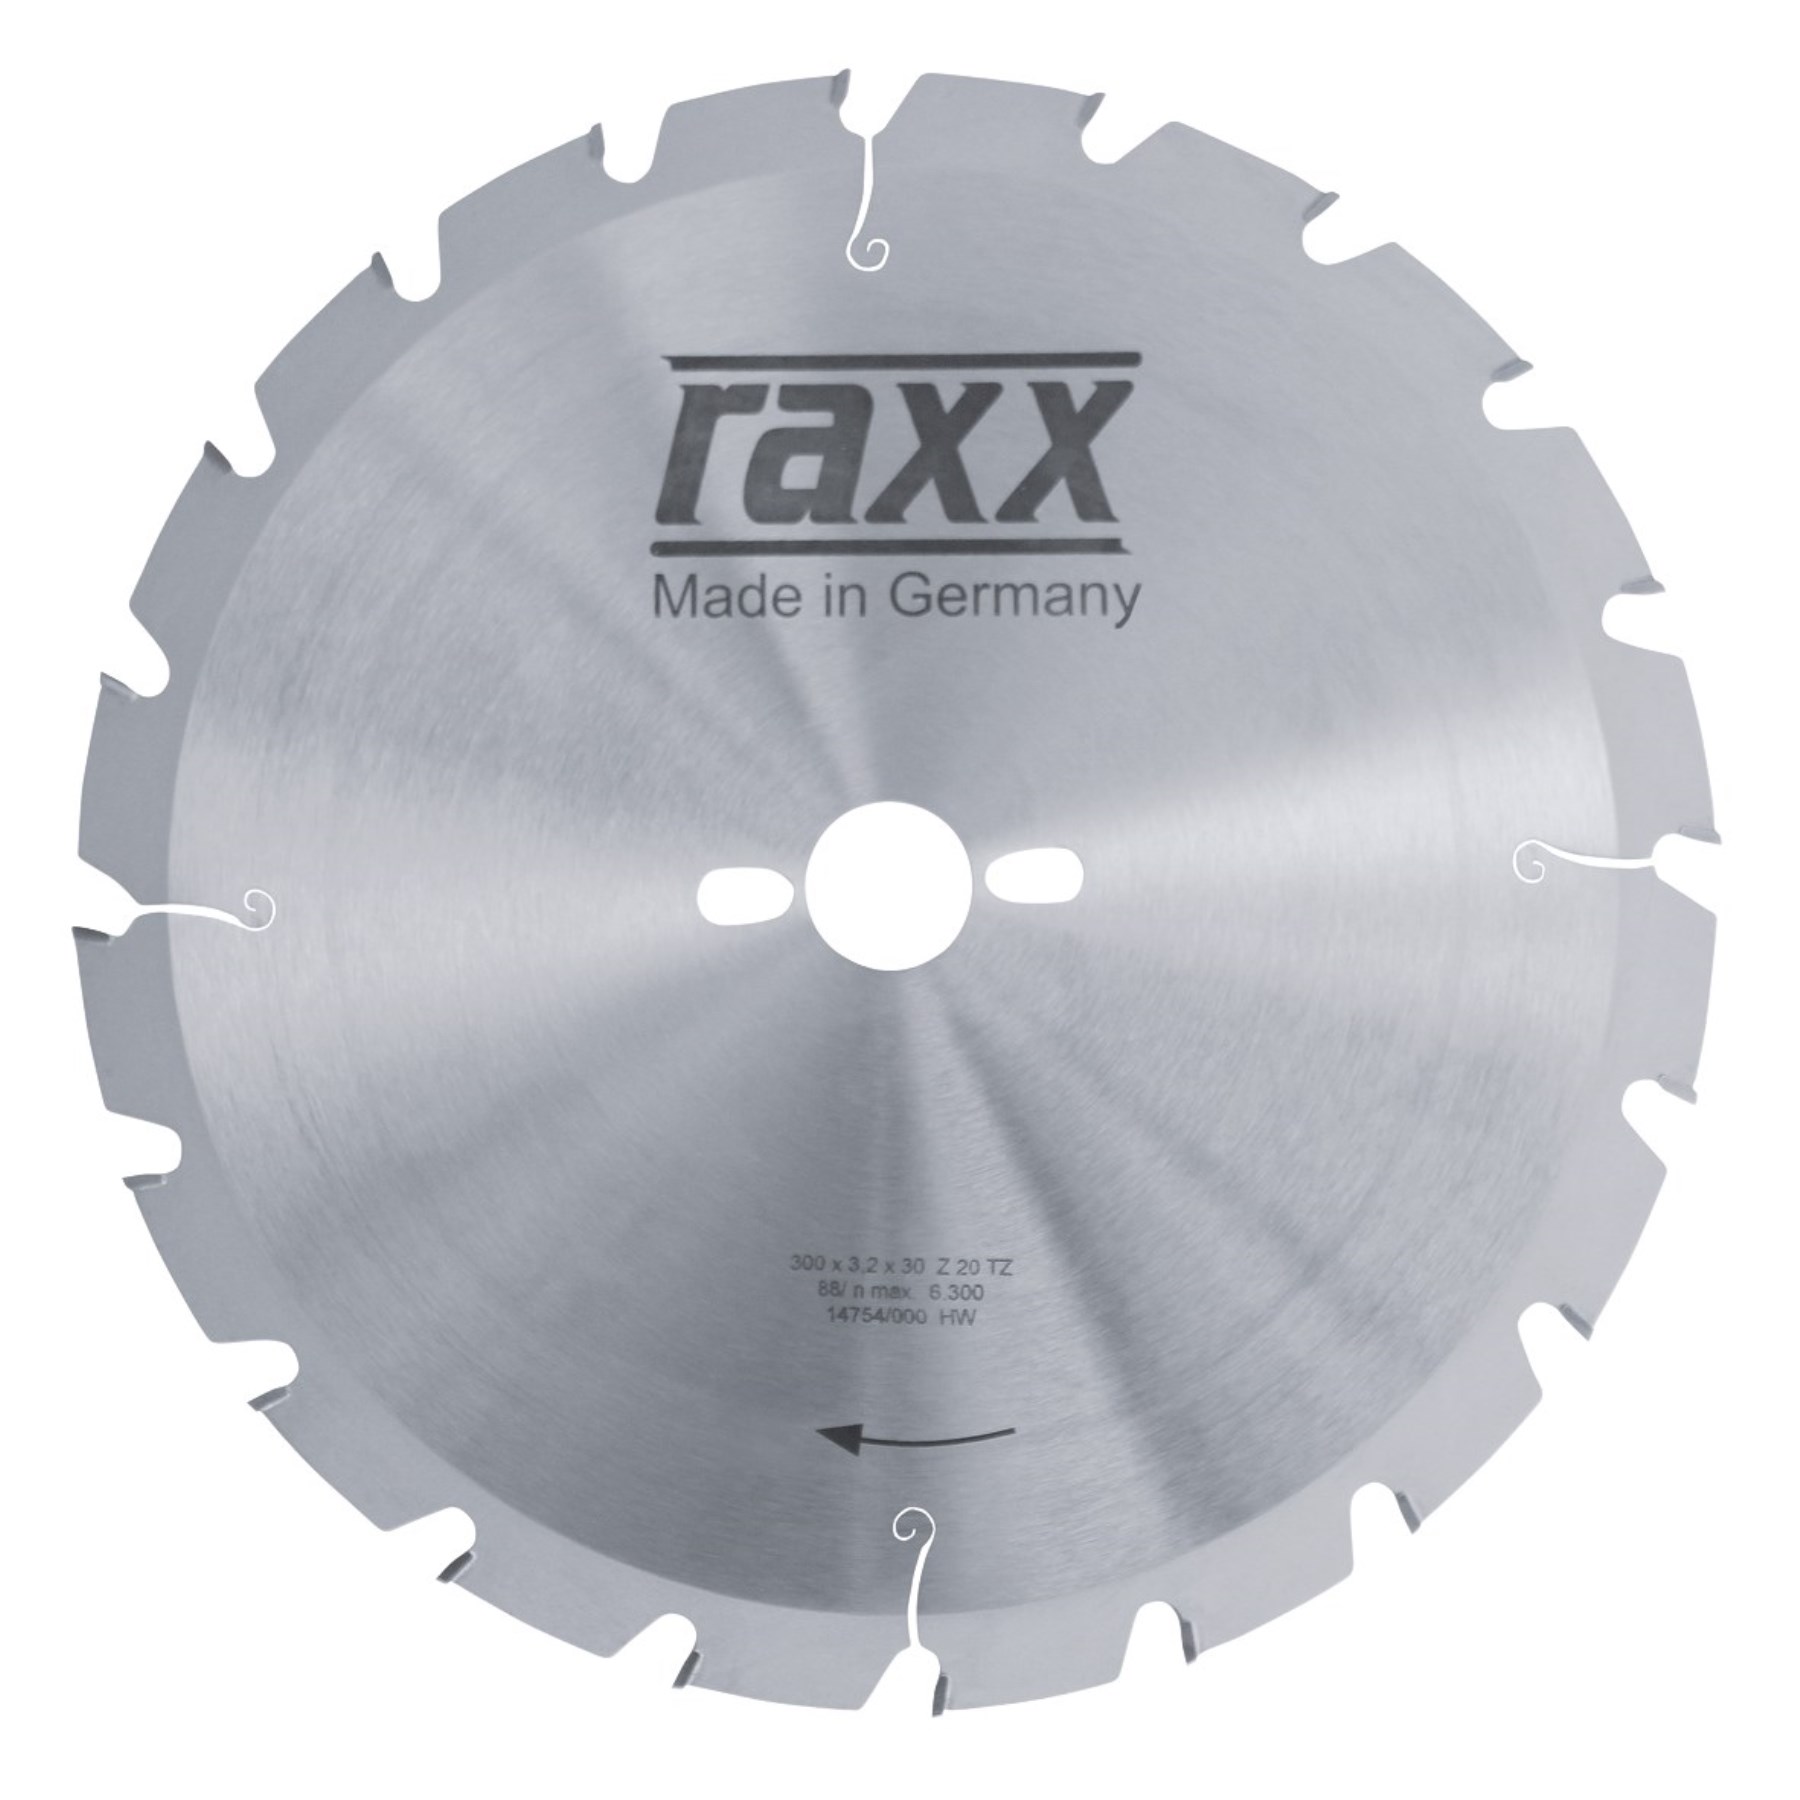 RAXX 1205079 kotouč k okružní pile HM 700x4,2x30 [ 31700300480060400 ]